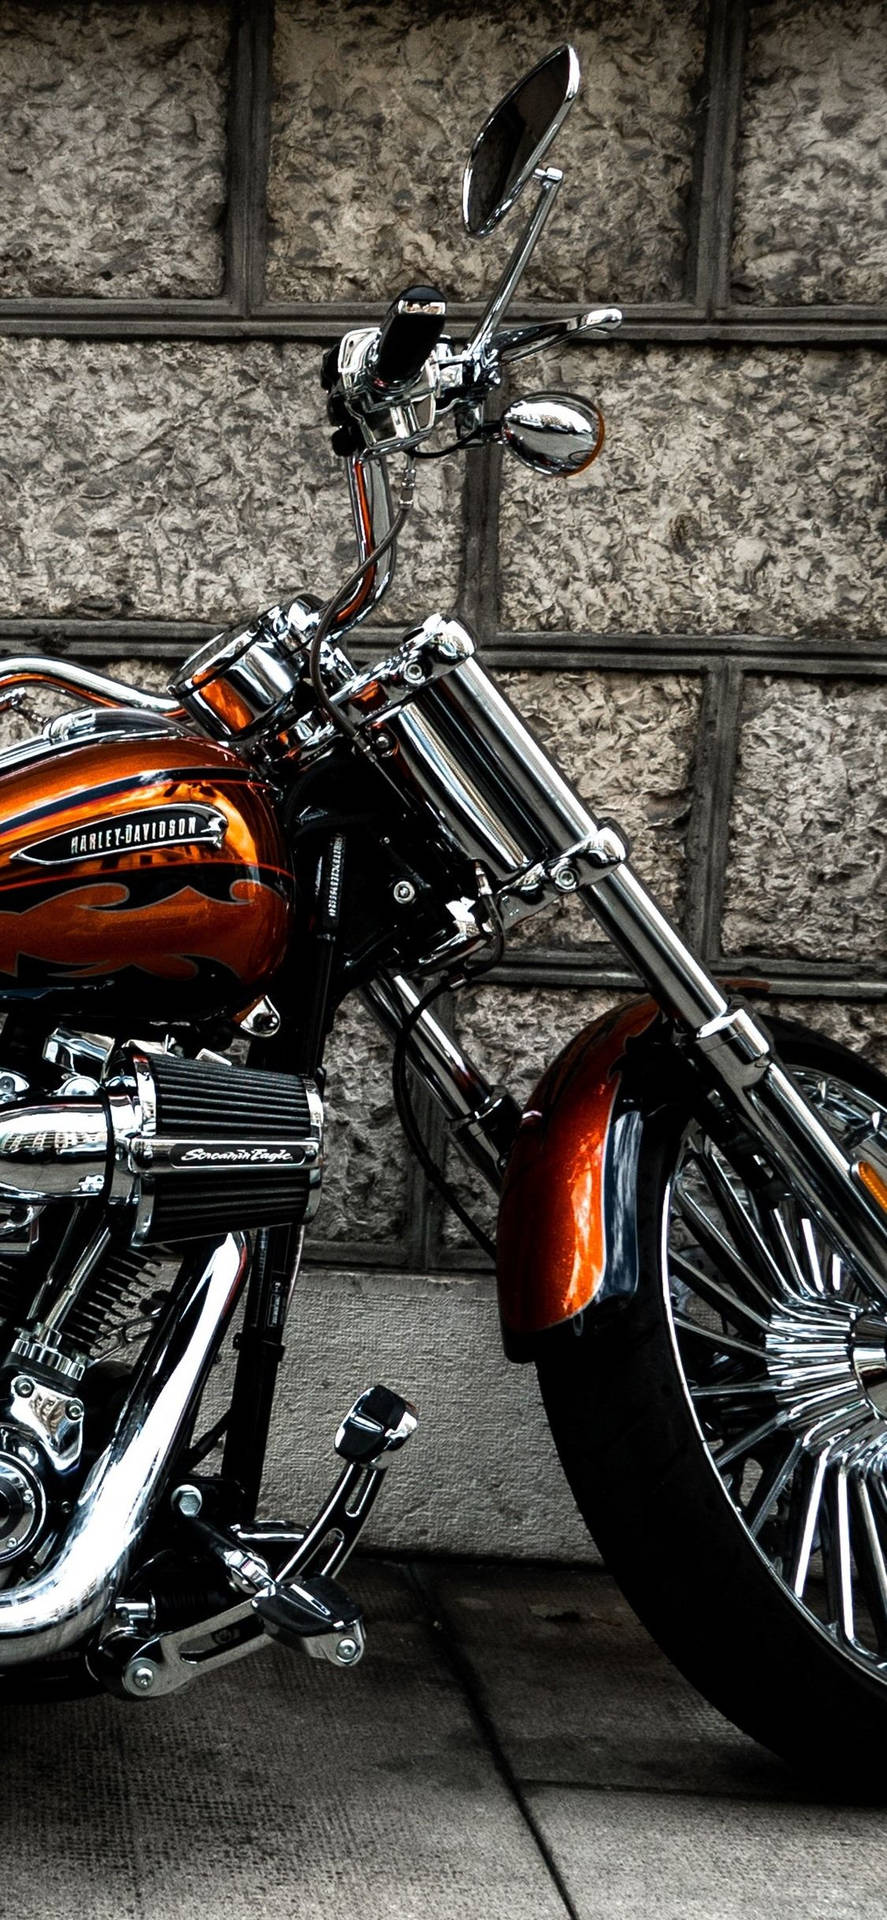 Cellulare Harley Davidson Sfondo